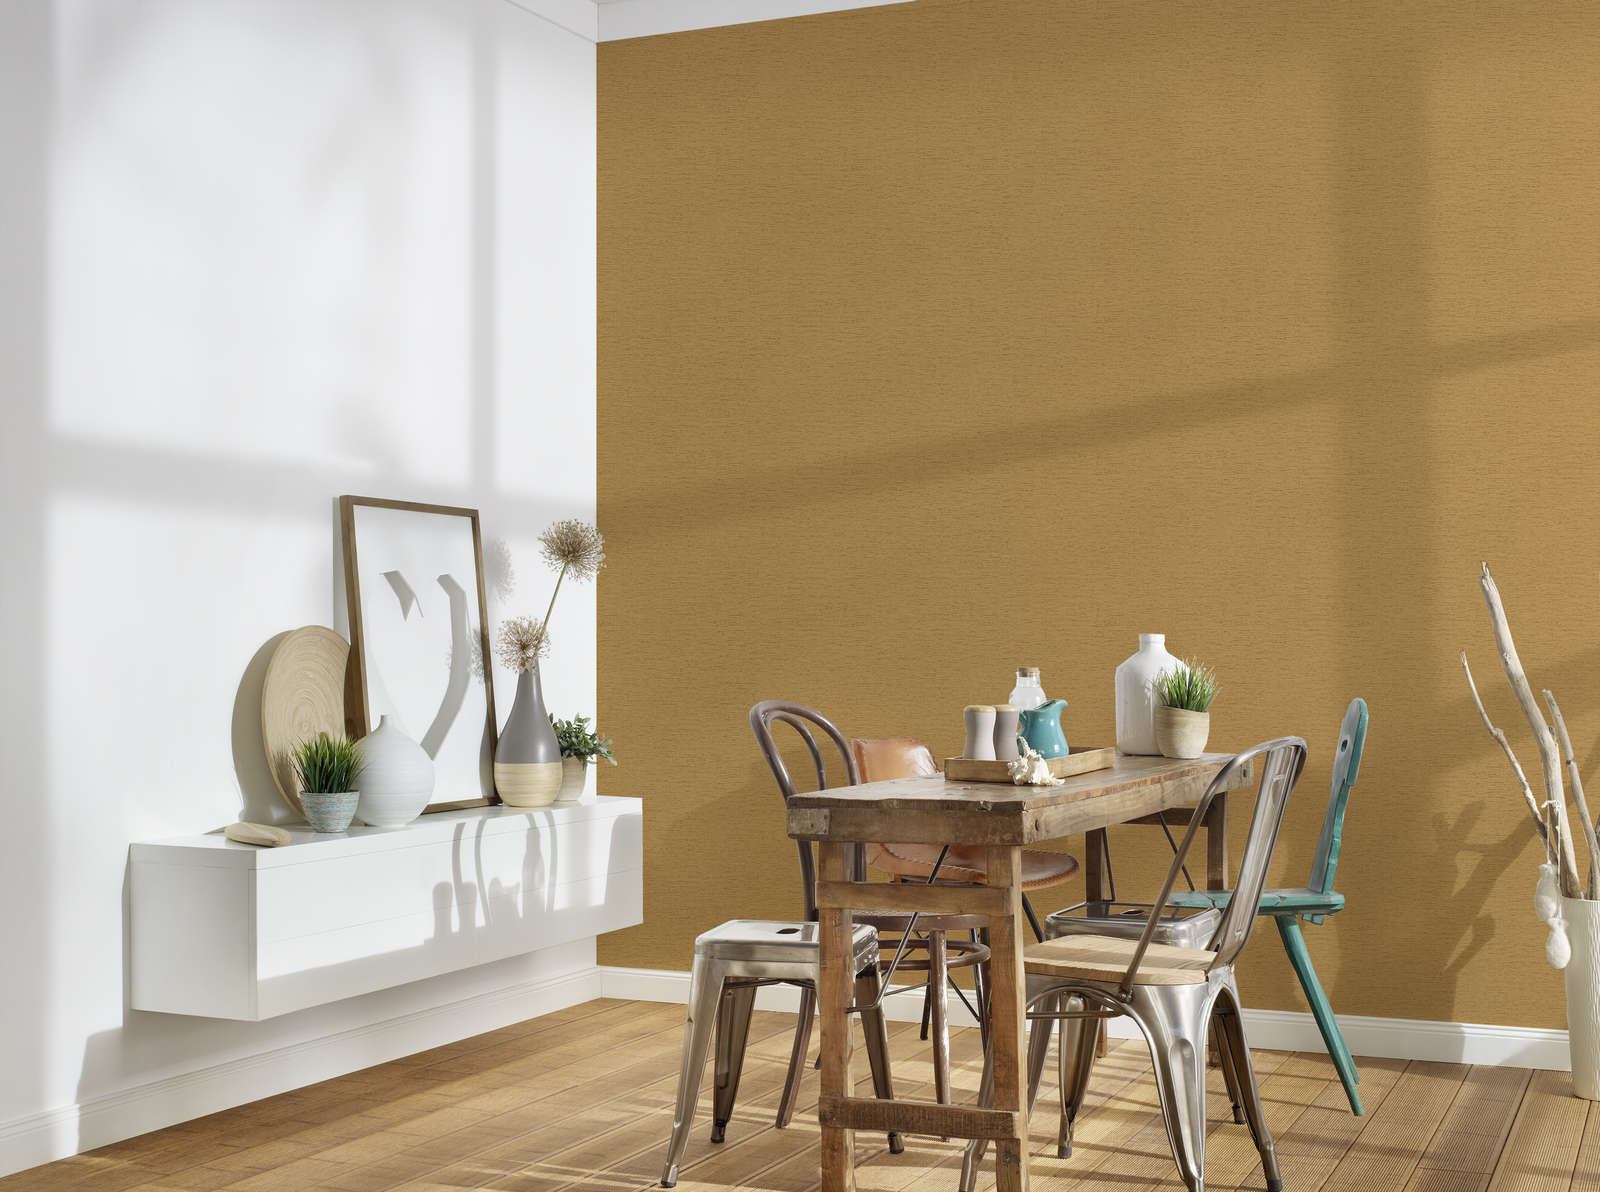             Plain wallpaper in textile look with light structure, matt - golden brown, yellow
        